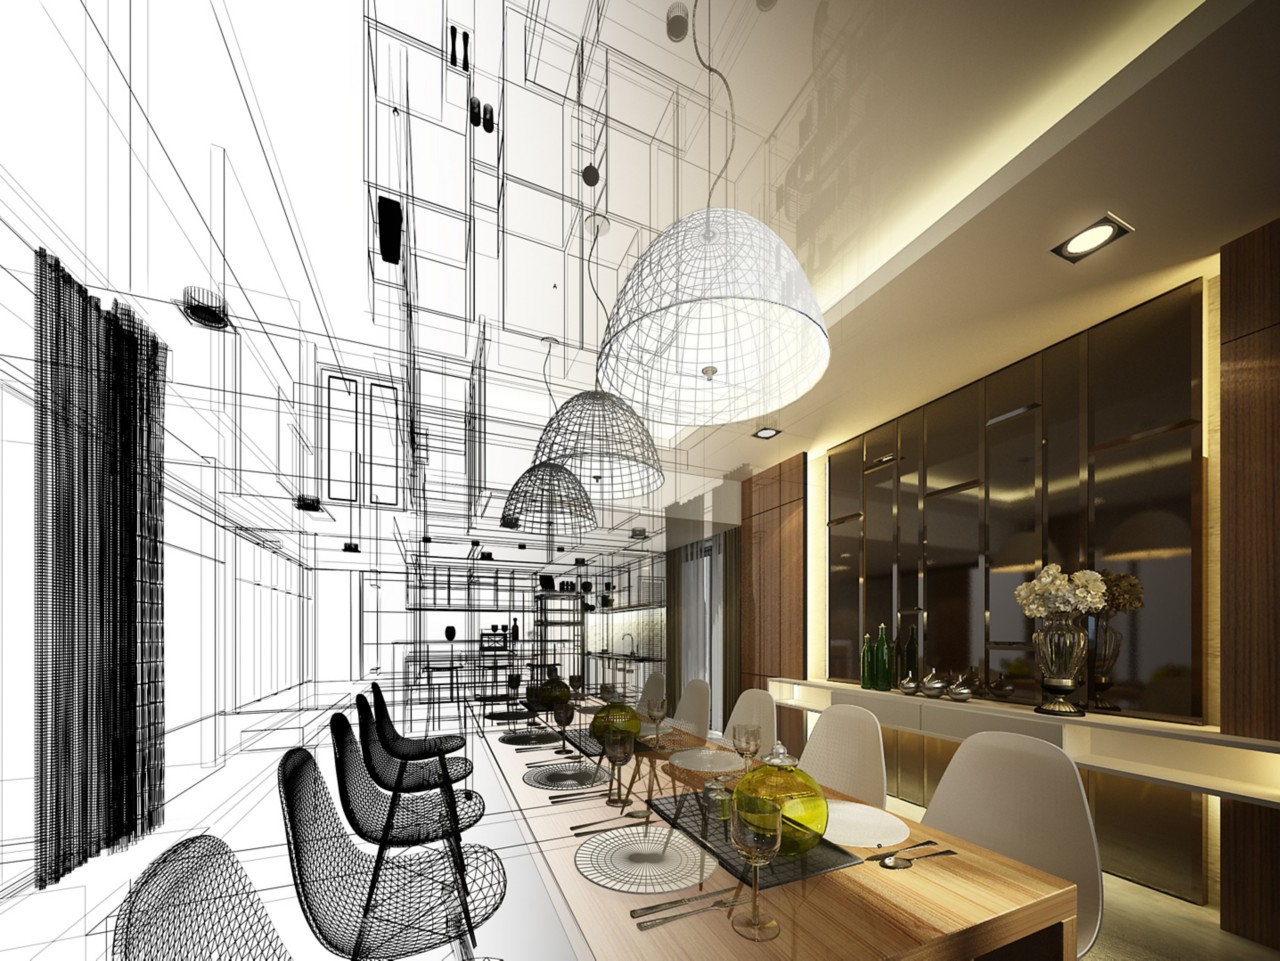 Interior Design - an abstract sketch design of interior dining, 3d render